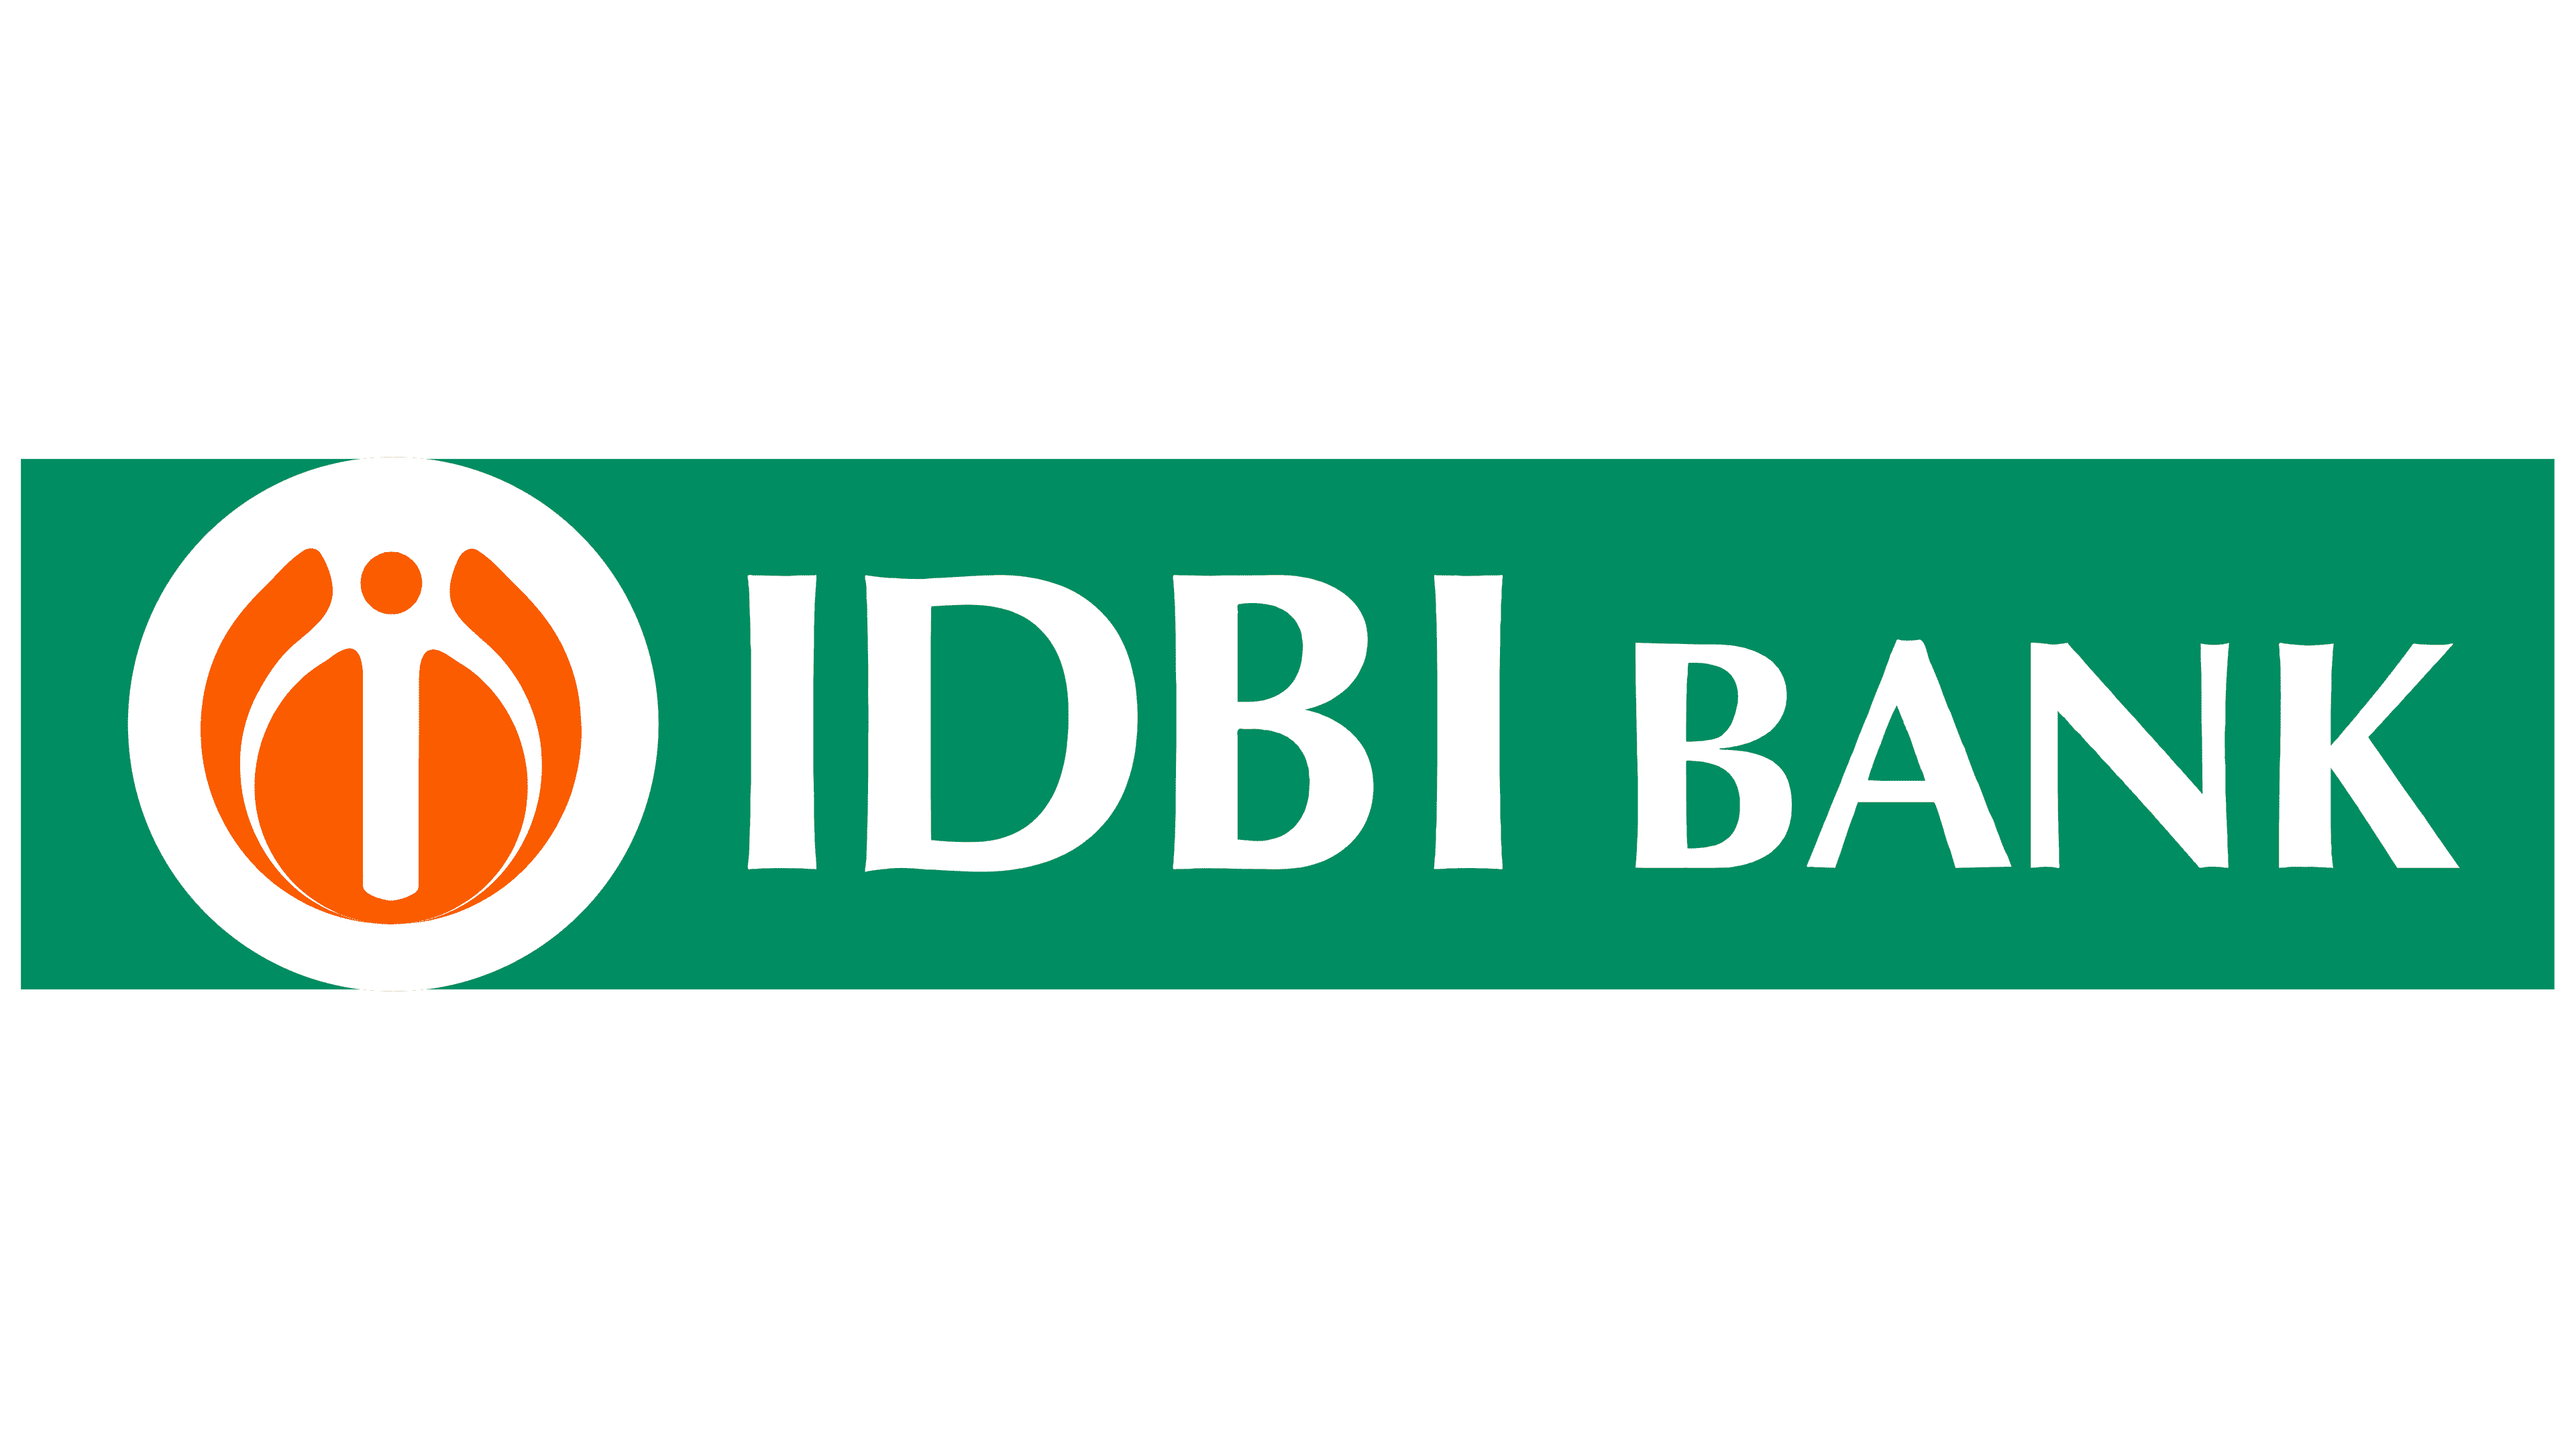 IDBI Bank Logo, symbol, meaning, history, PNG, brand